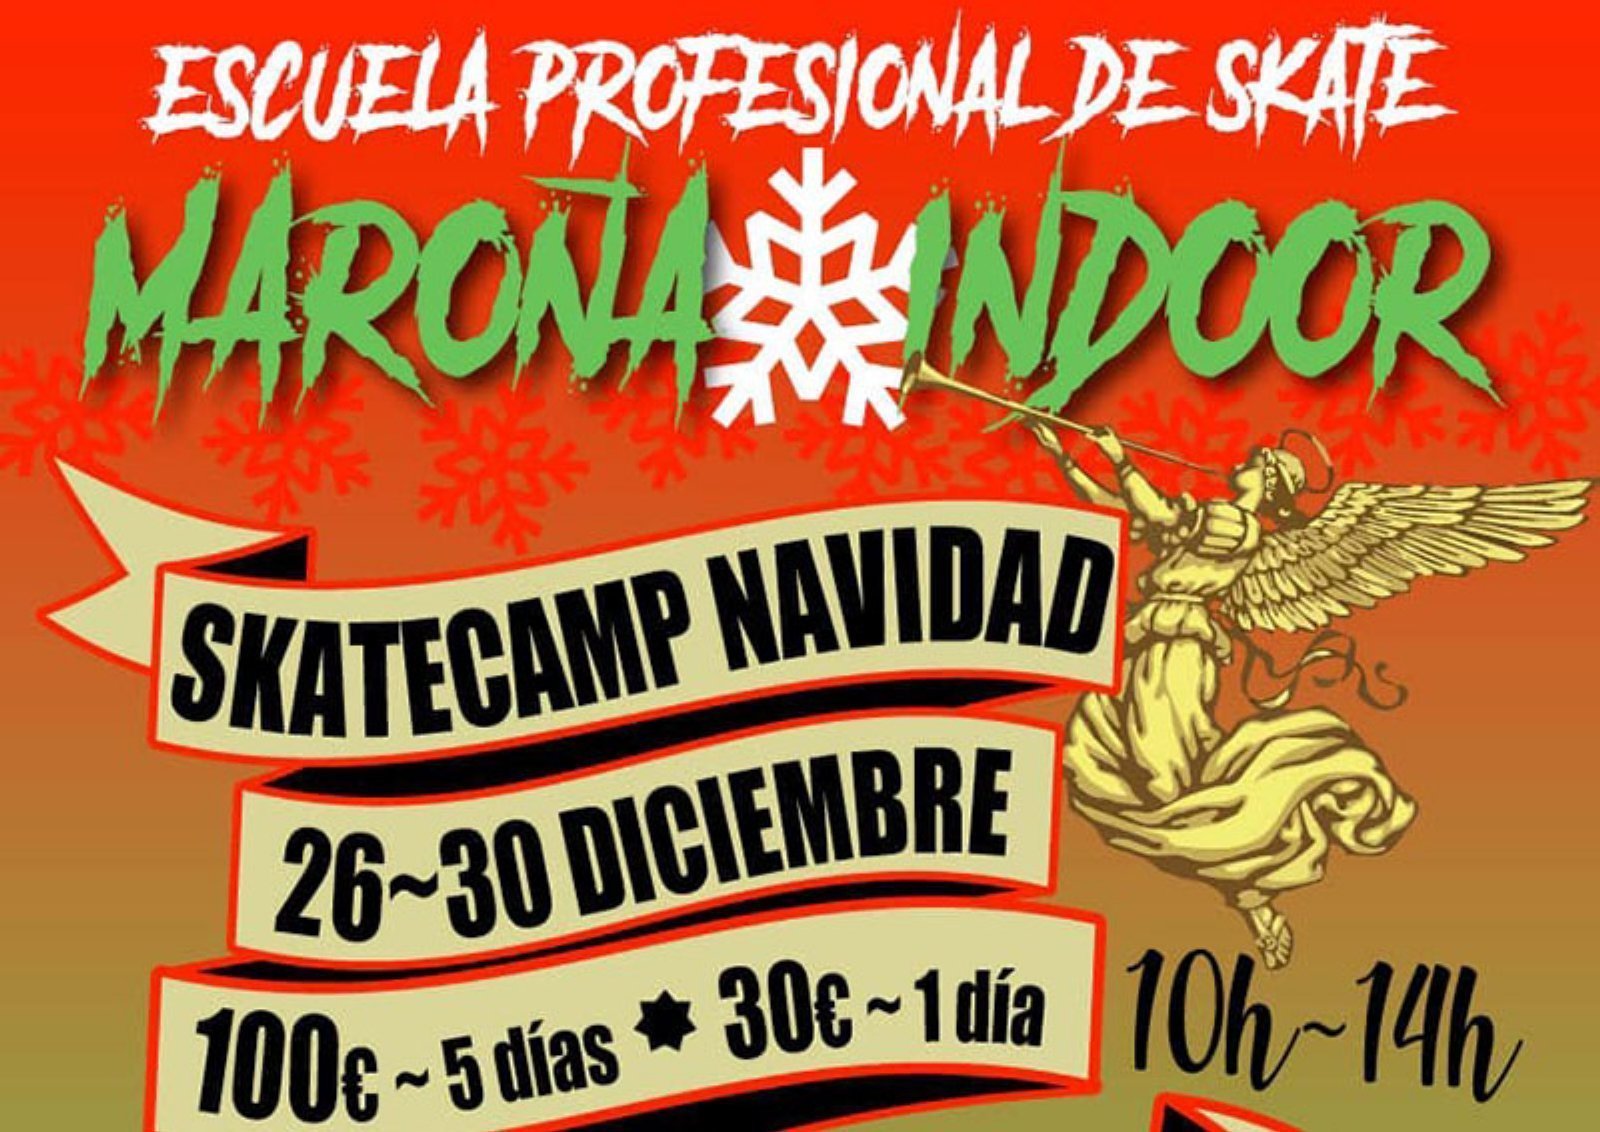 Skatecamp navidad en Maroña Indoor